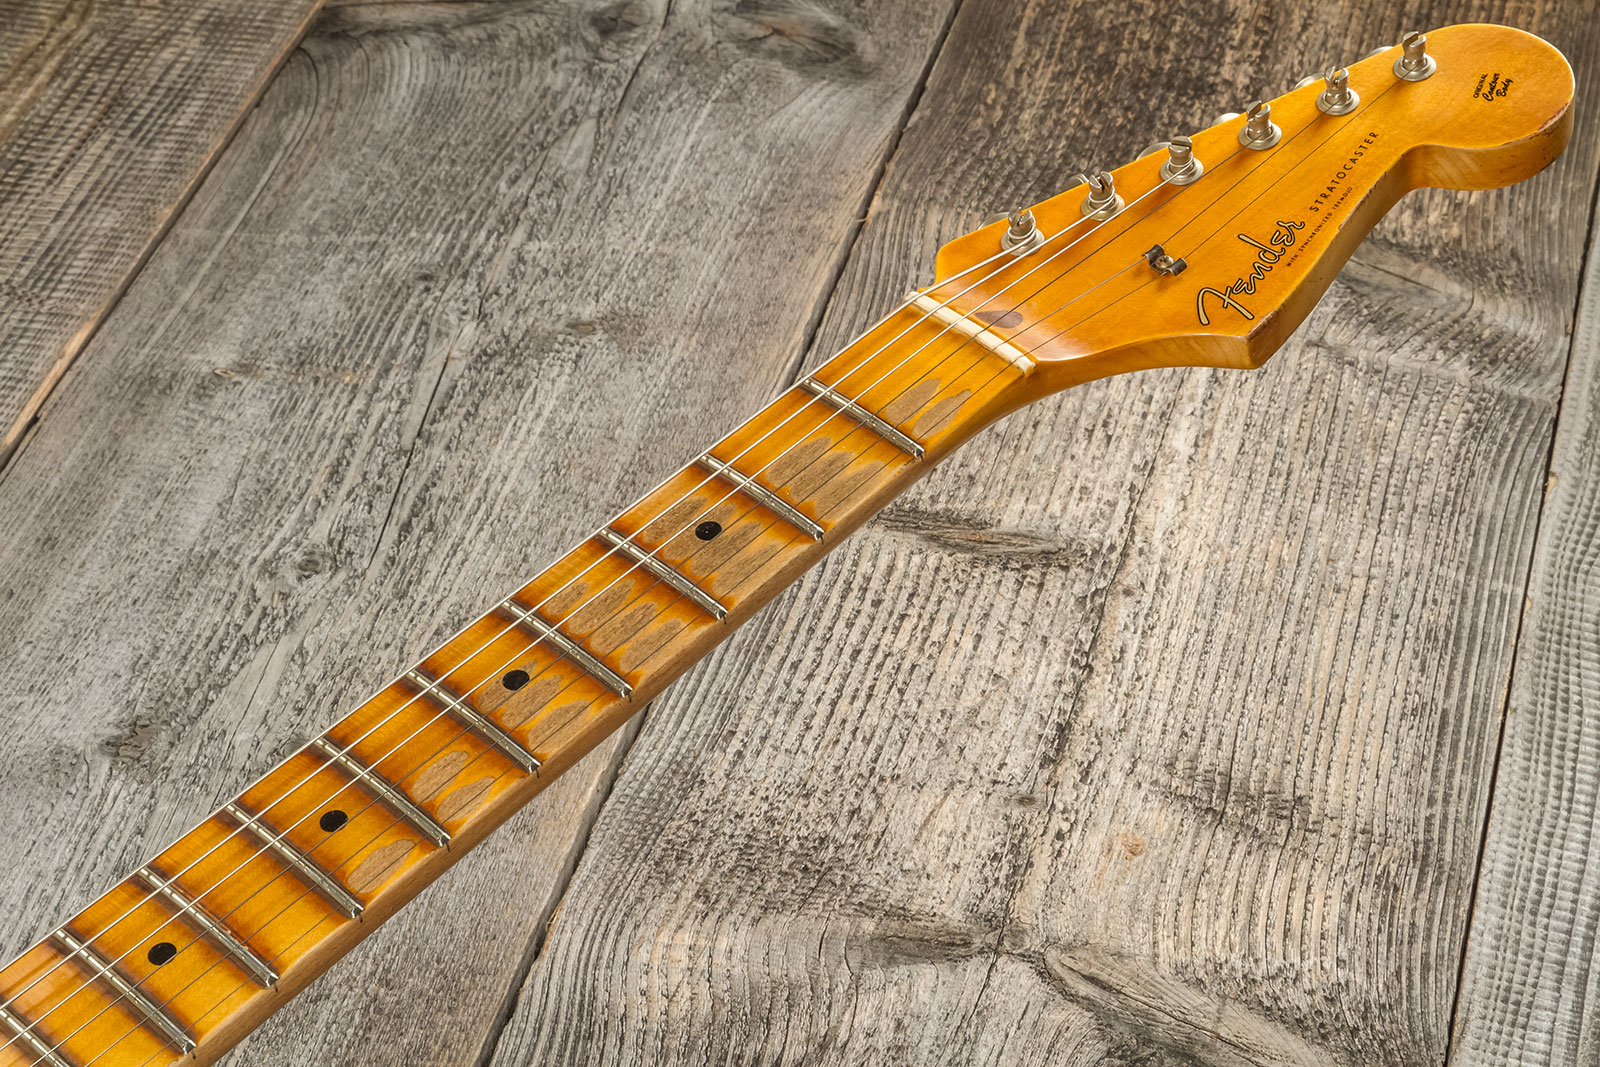 Fender Custom Shop Strat Fat 50's 3s Trem Mn #cz570495 - Relic India Ivory - Guitare Électrique Forme Str - Variation 7